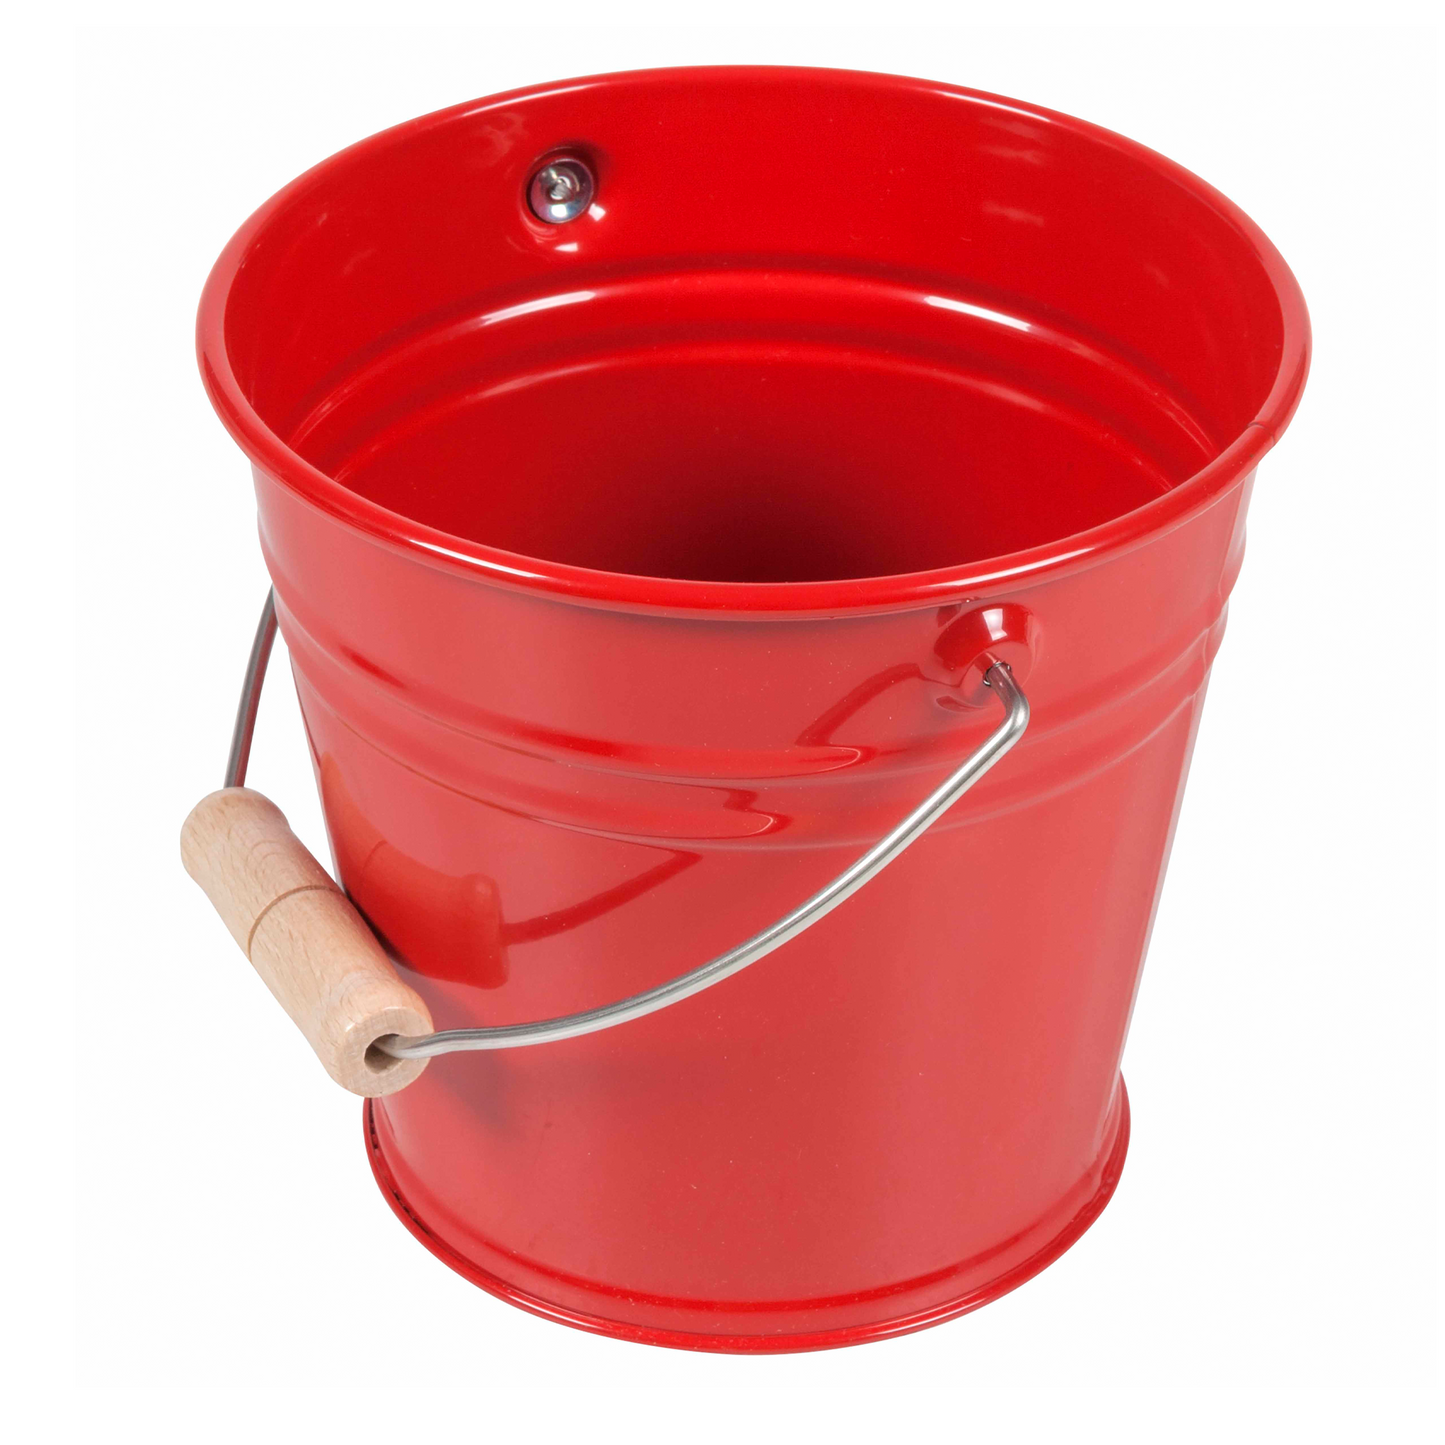 Small red bucket - Nienhuis AMI